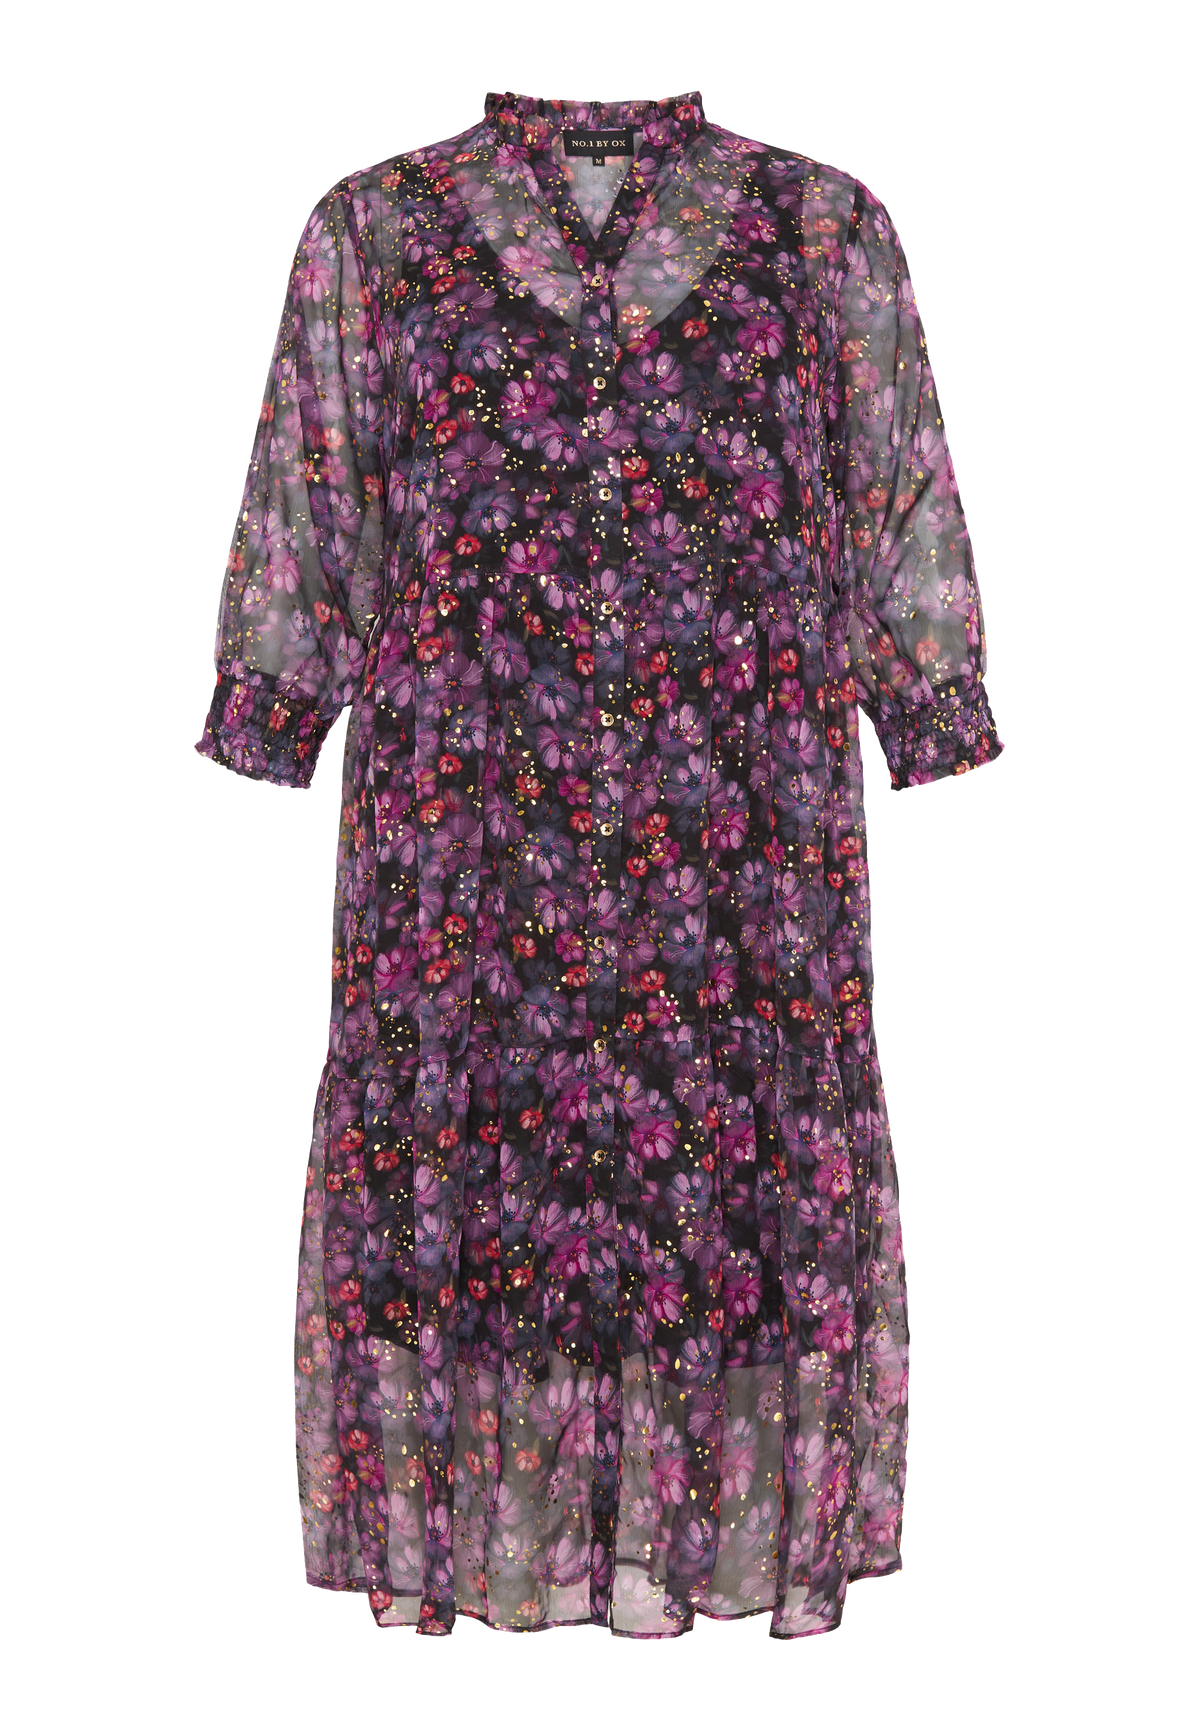 NO. 1 BY OX Blomsterprintet kjole med guld prikker Kjoler Black w Purple, Gold Flowers